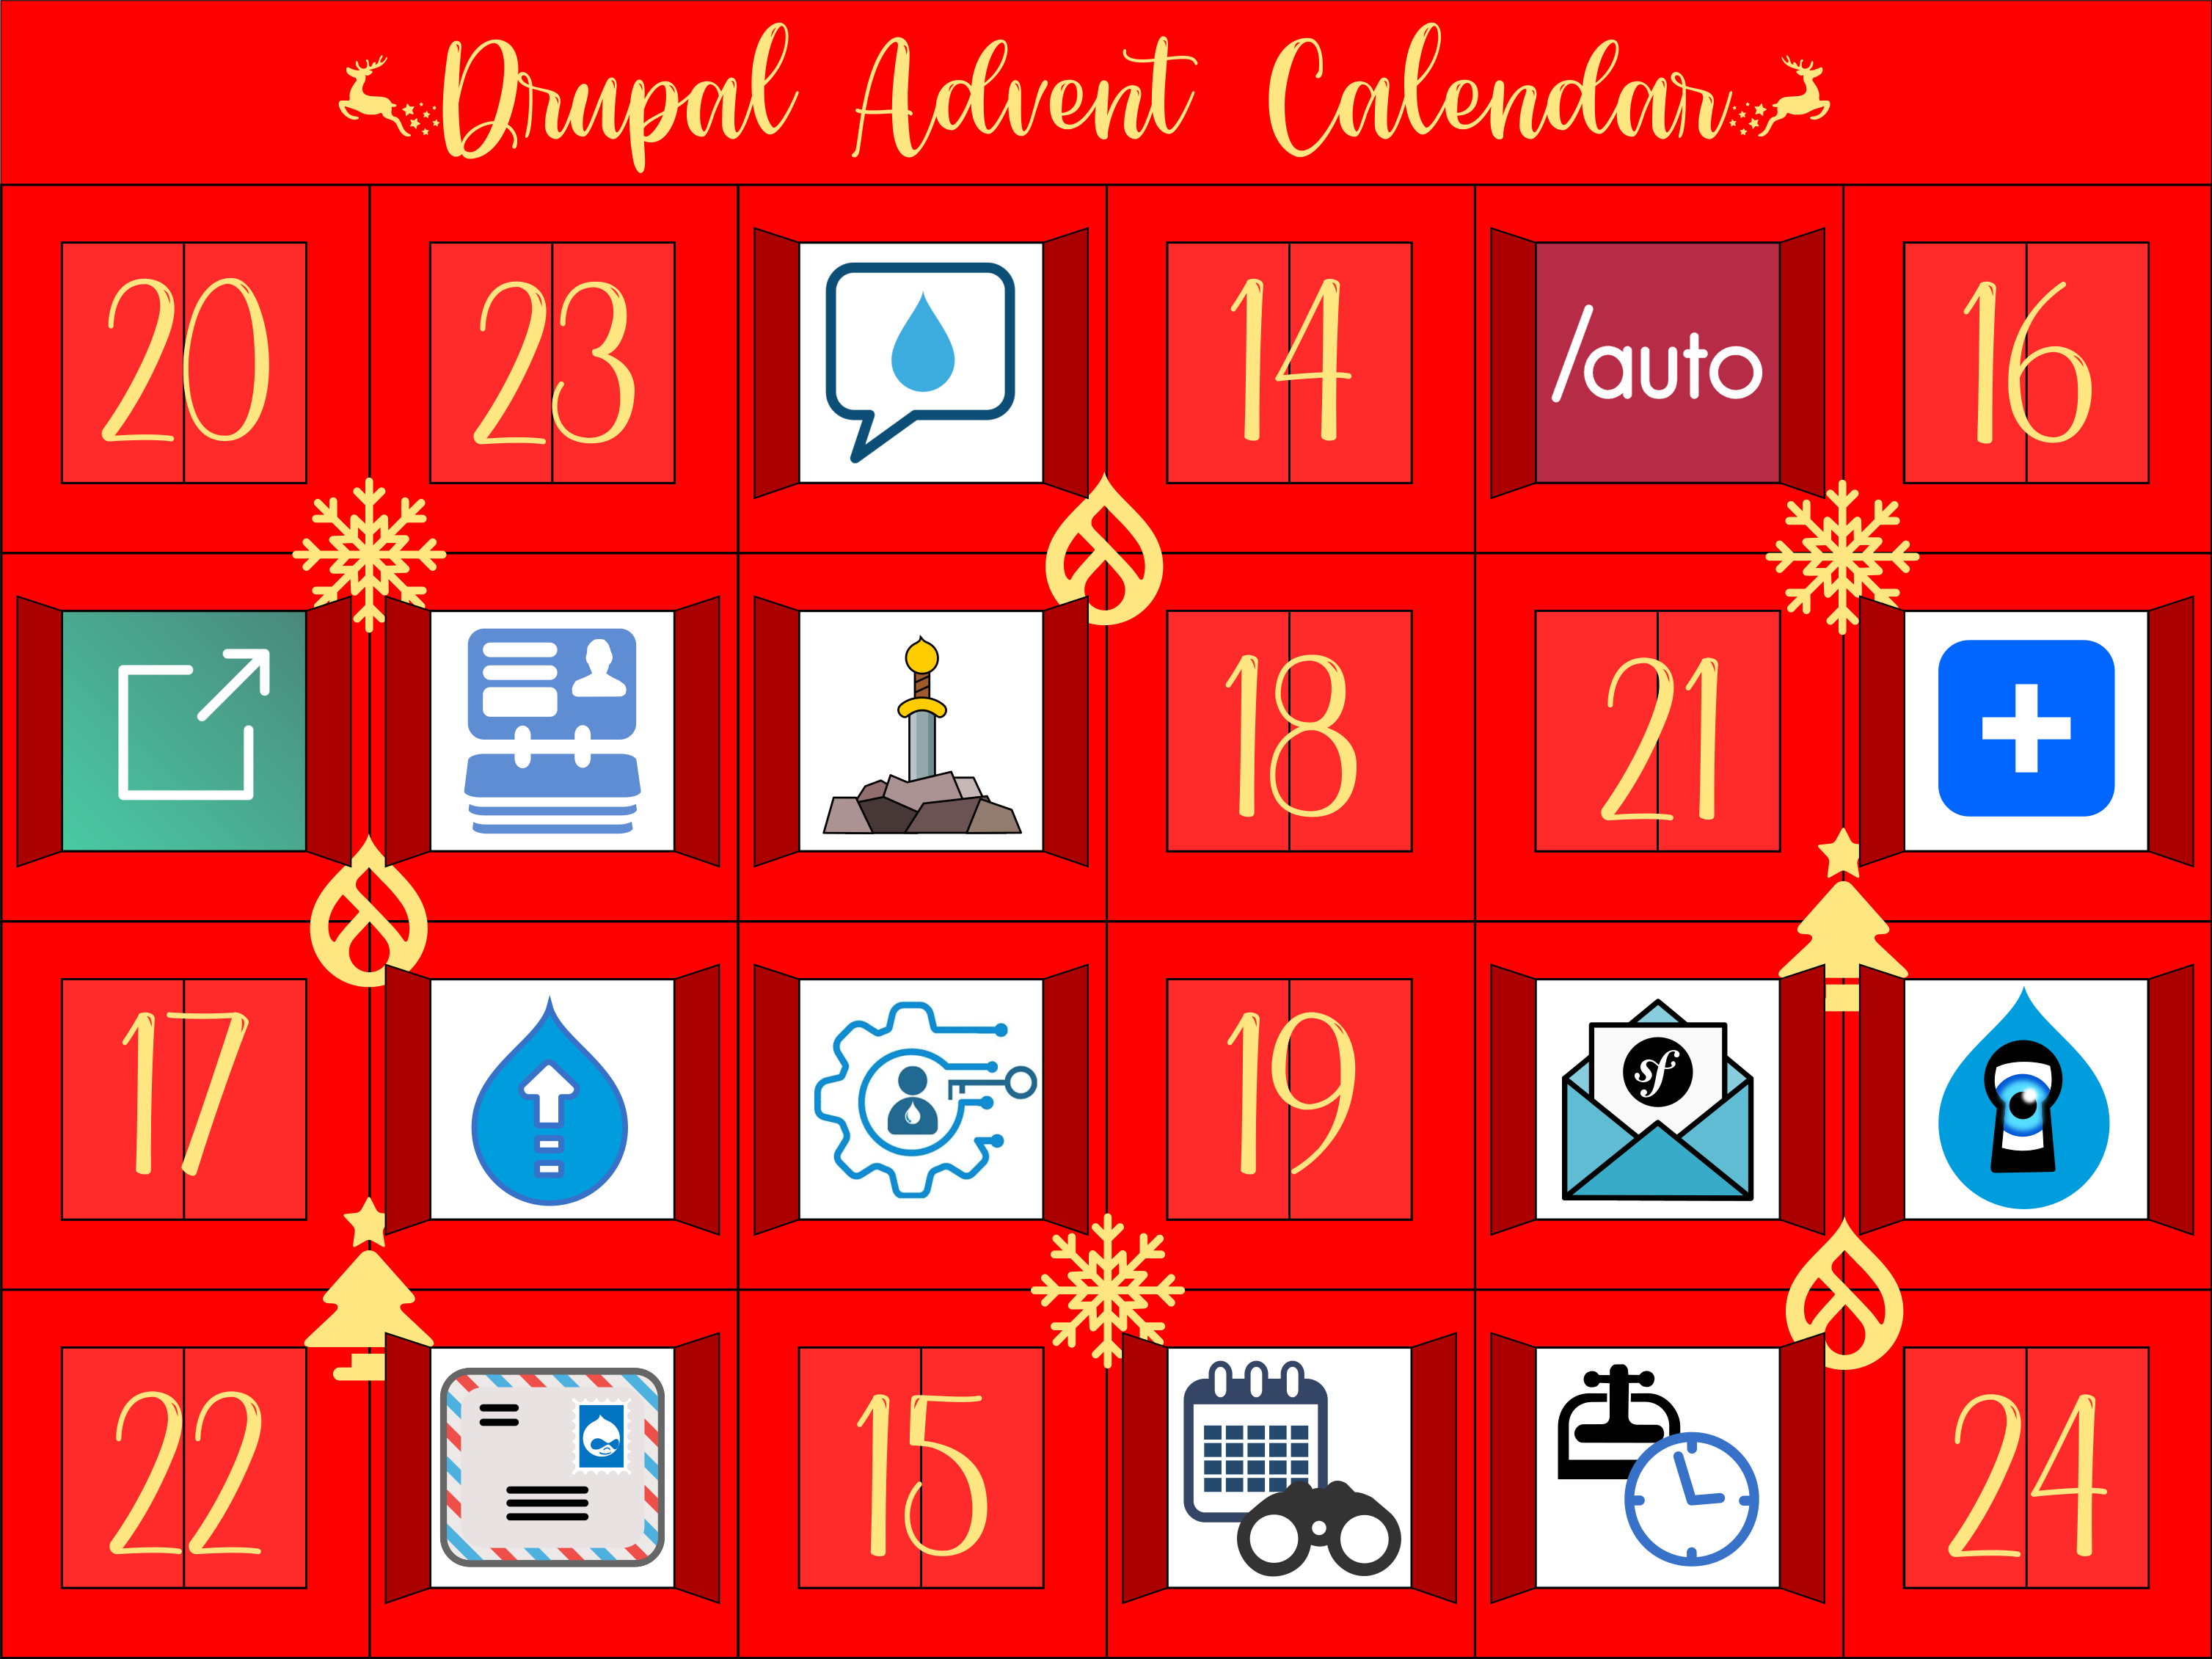 Advent Calendar with door 13 open containing the Upgrade Status module